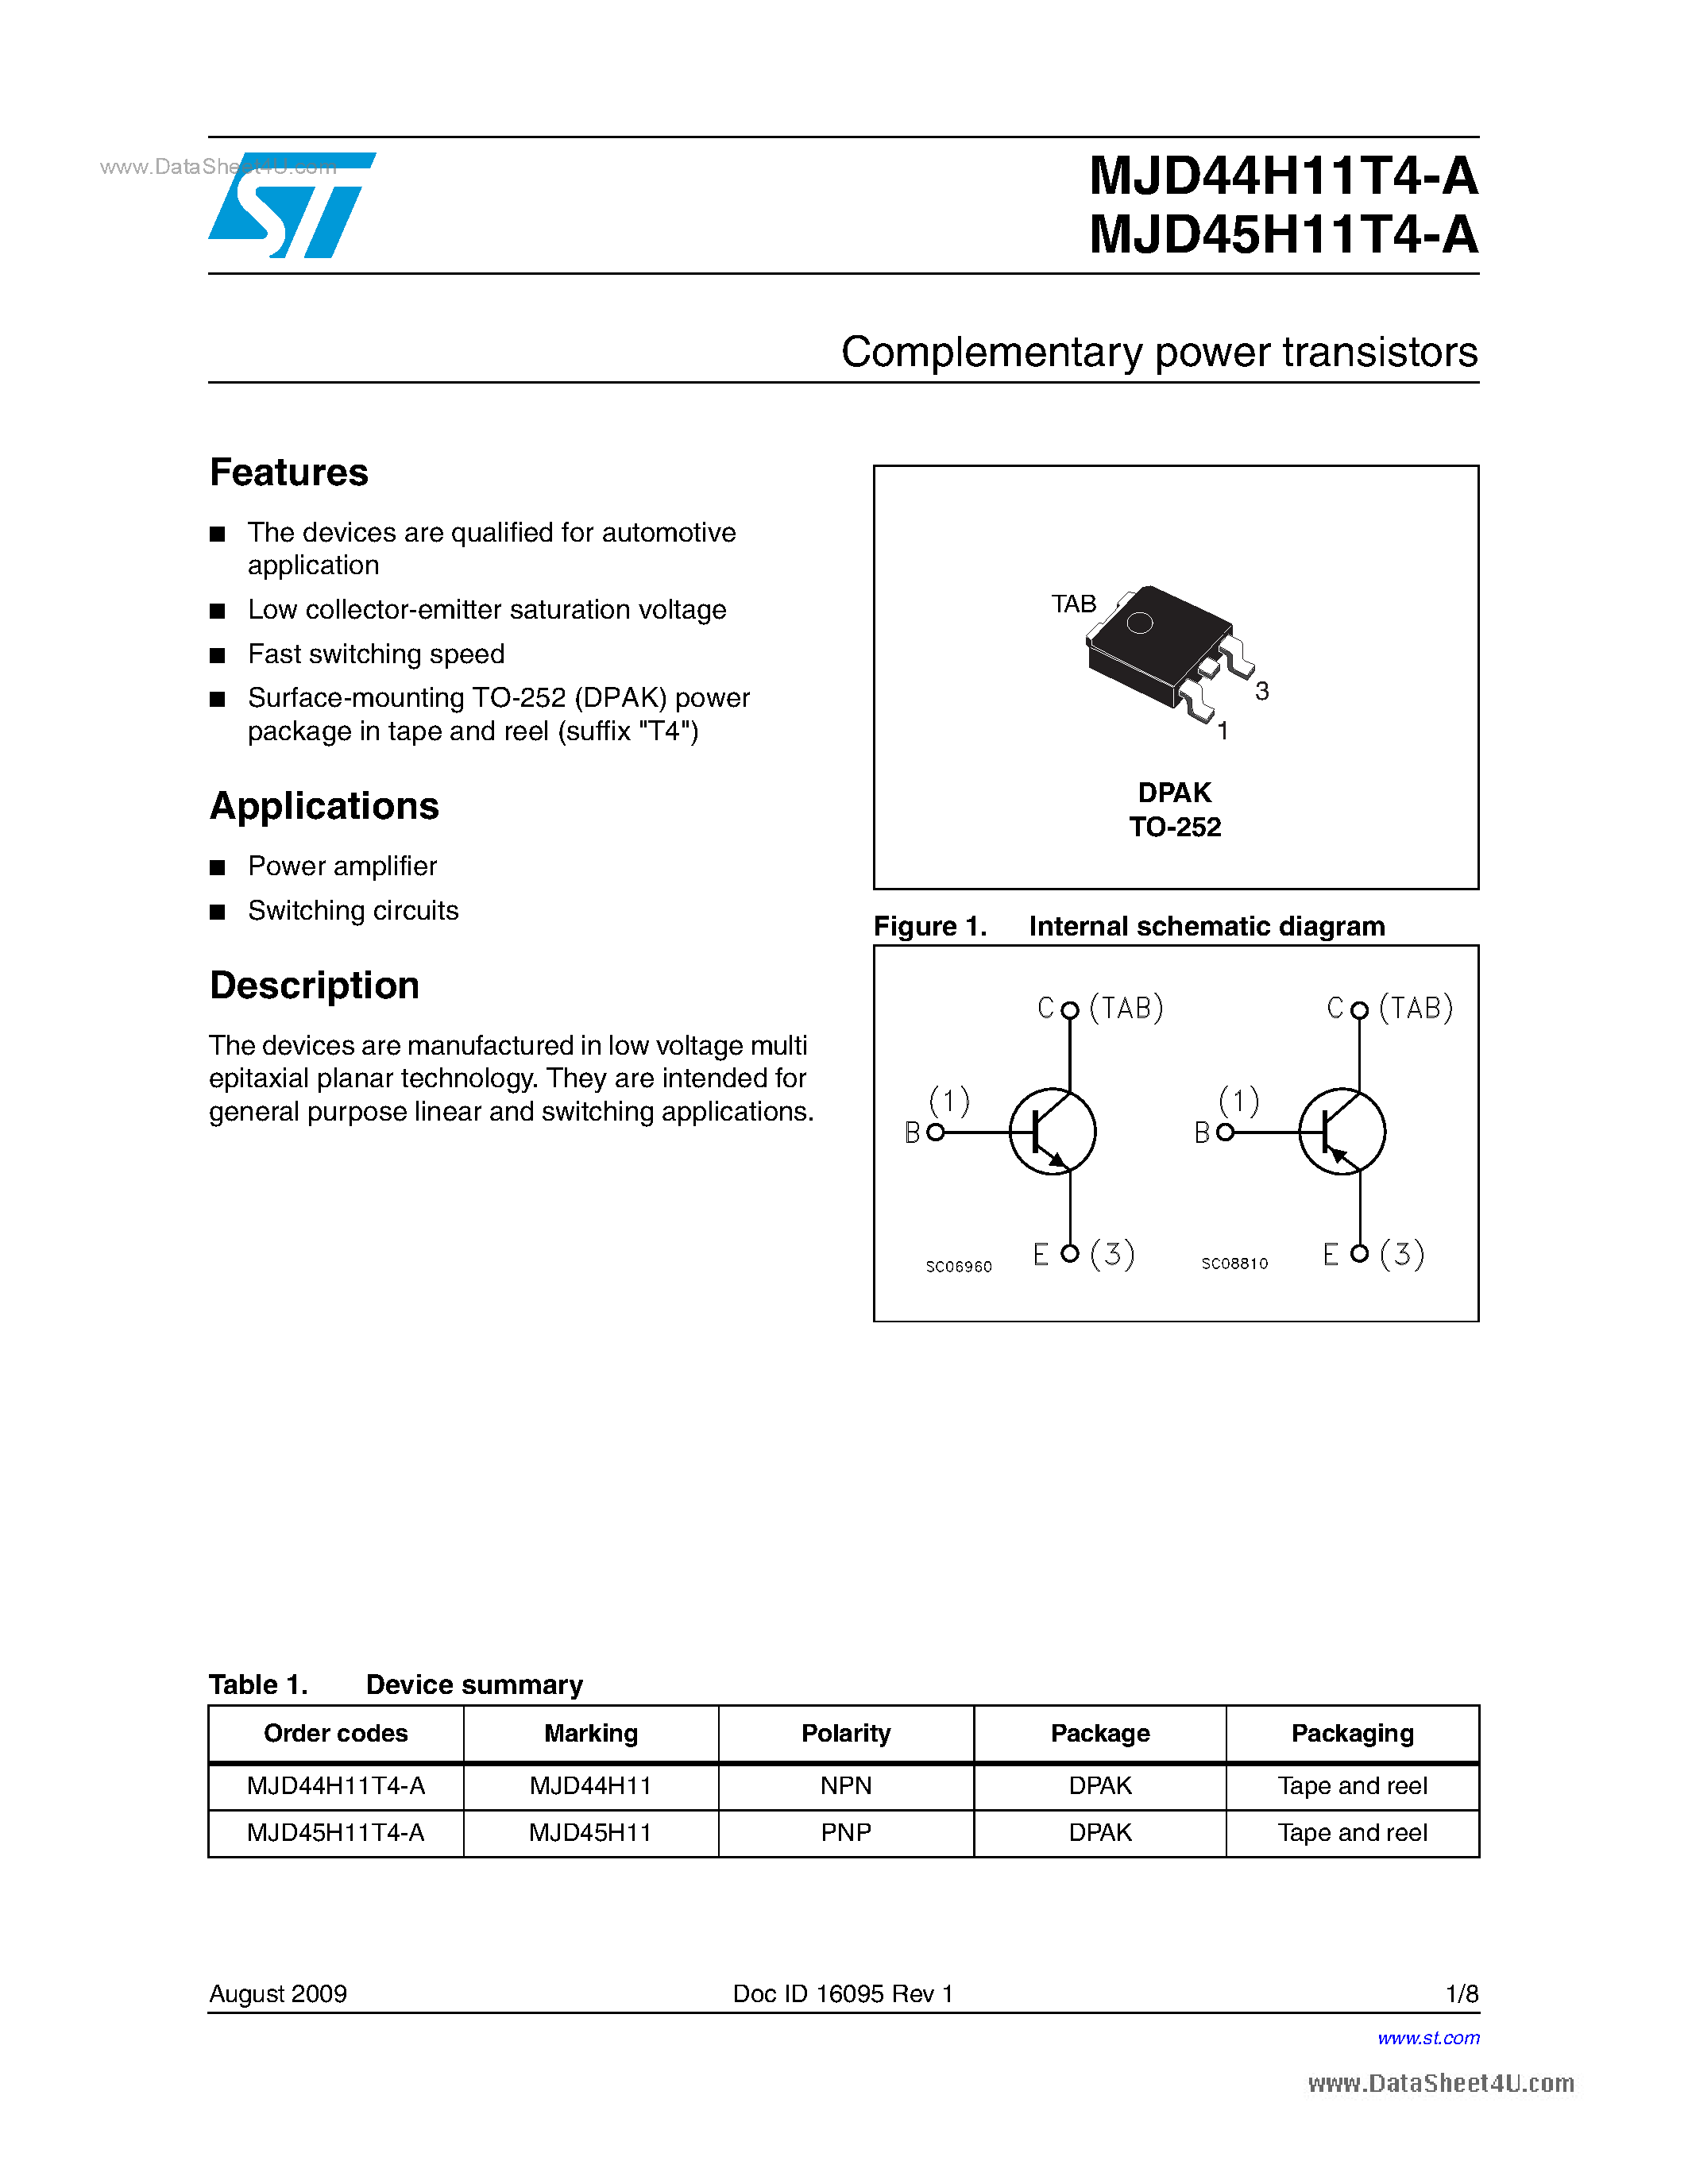 Datasheet MJD44H11T4-A - (MJD44H11T4-A / MJD44H11T4-A) Complementary power transistors page 1